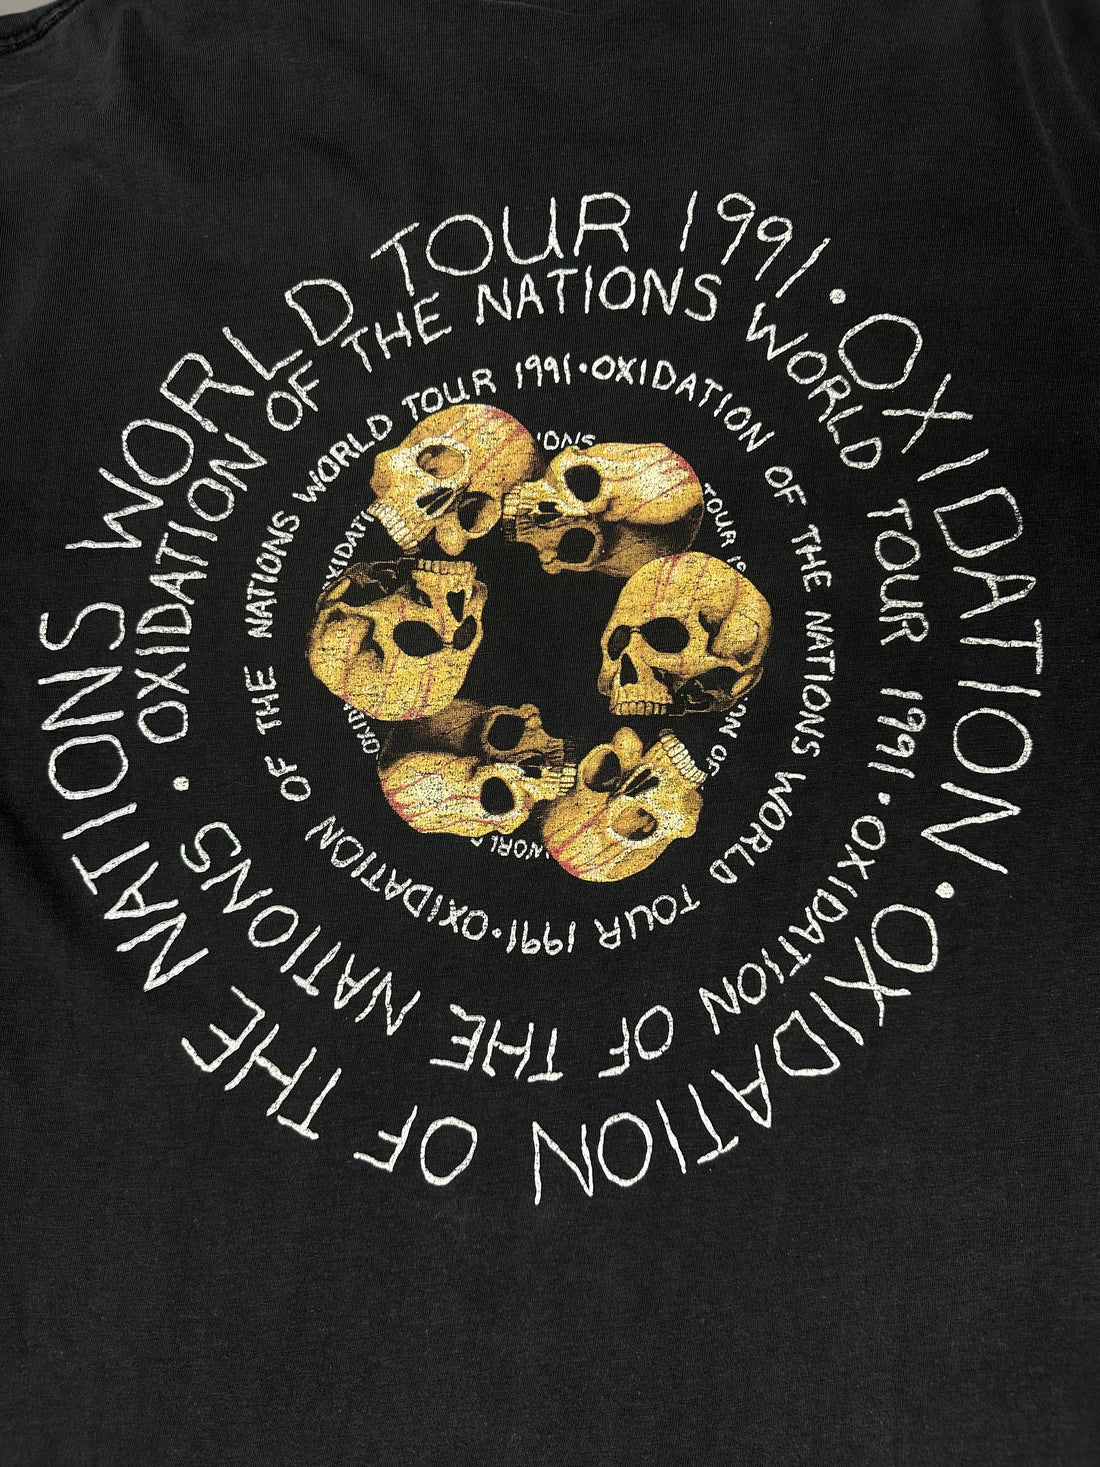 Megadeth 1990 World Tour Vintage T-Shirt